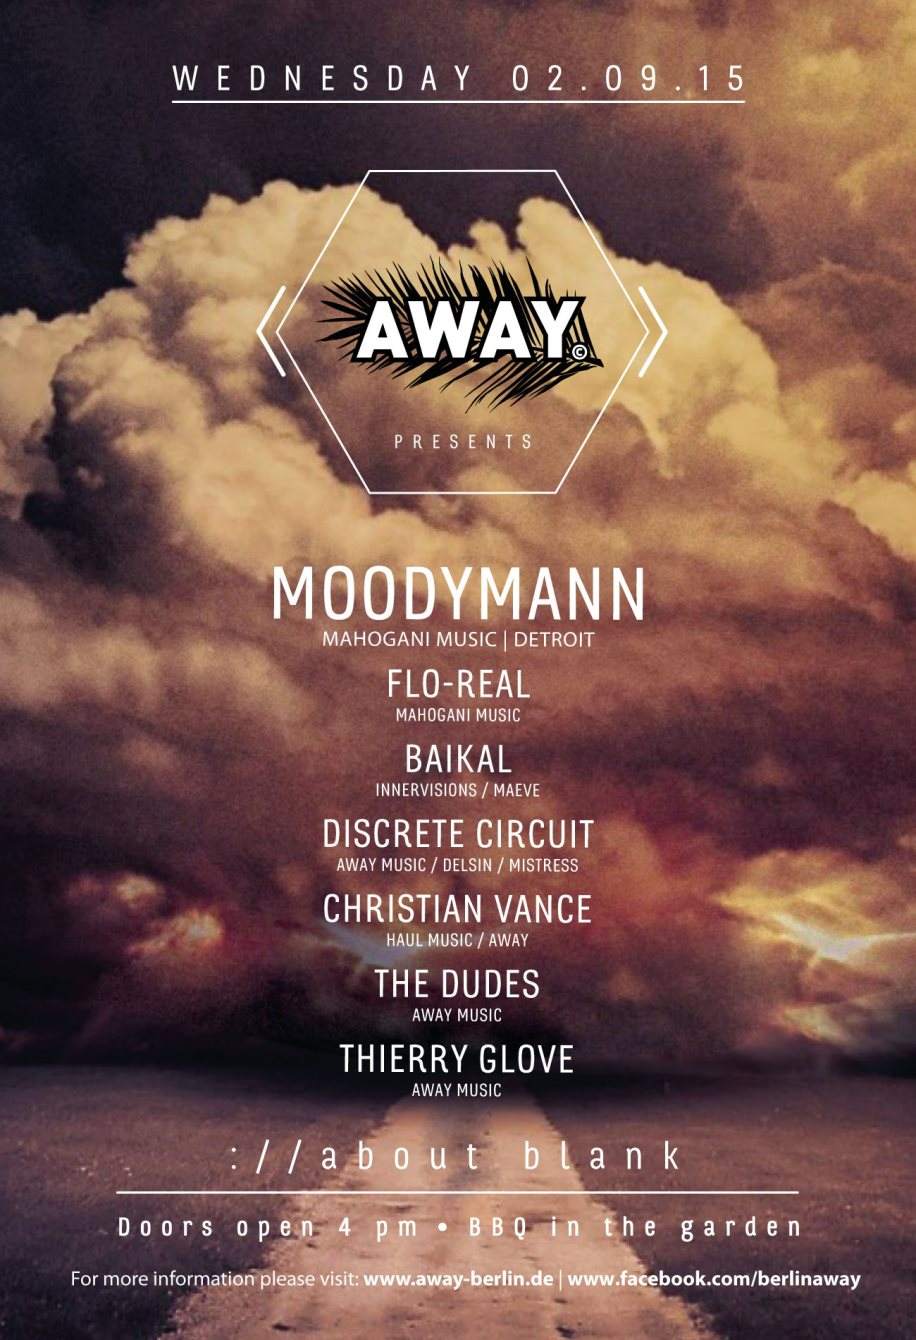 Away presents Moodymann - フライヤー裏